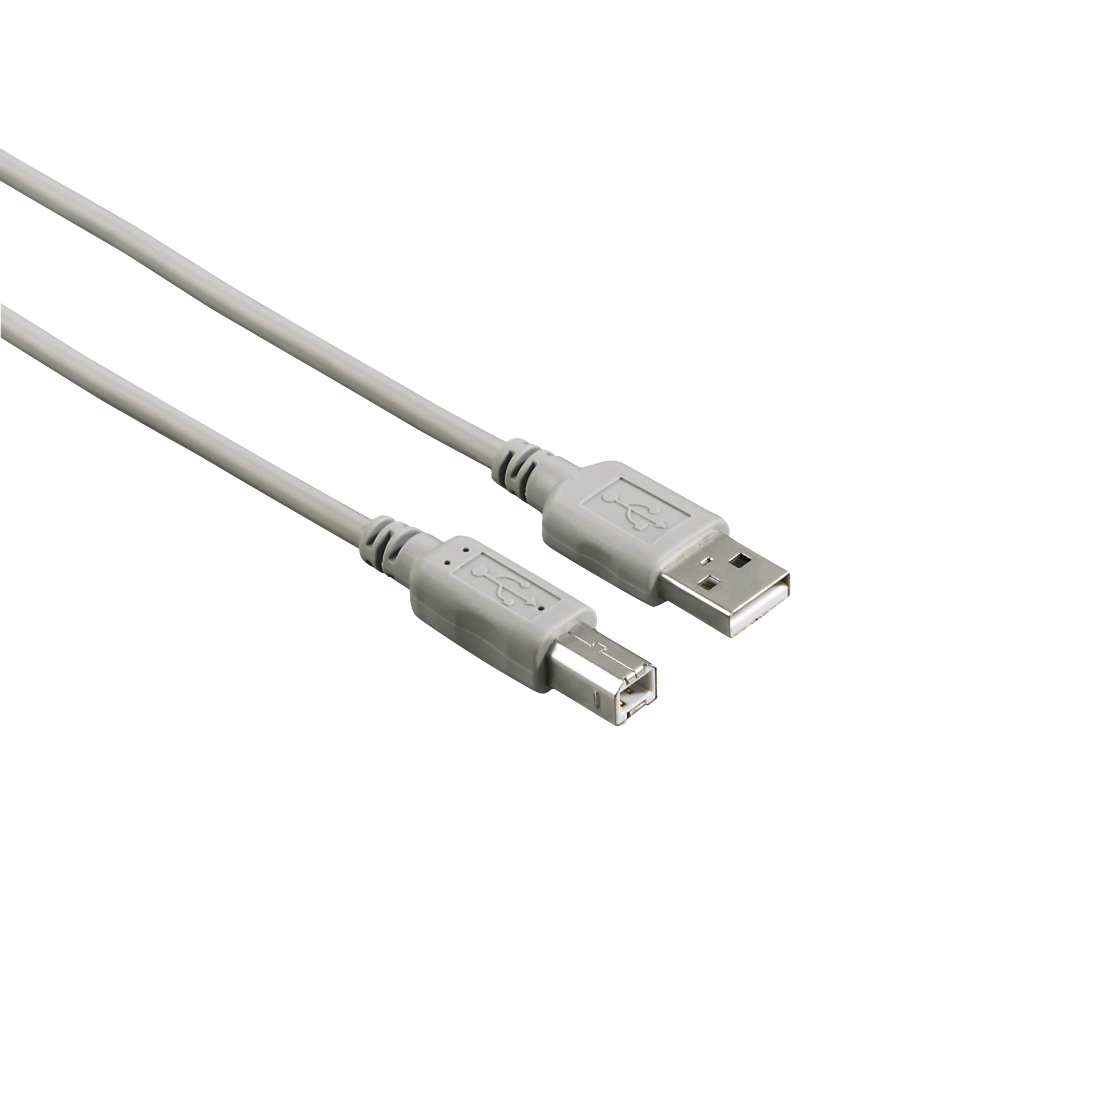 Cable USB, USB 2.0, 3,00 m, 10 unidades | Hama